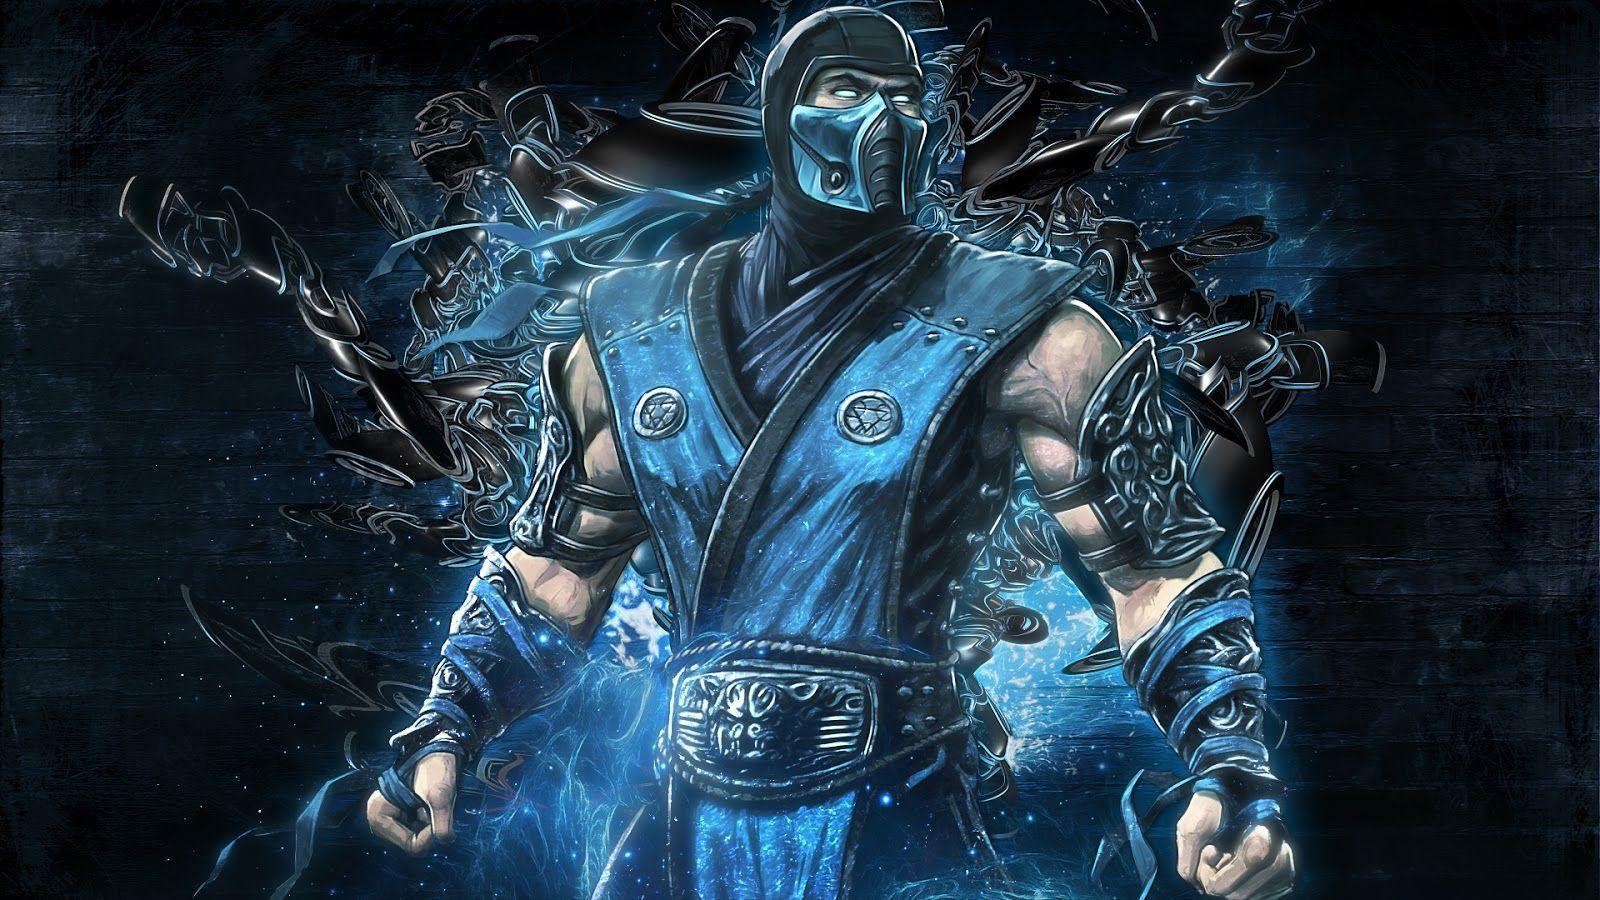 image For > Mortal Kombat 9 Scorpion Fatality Wallpaper